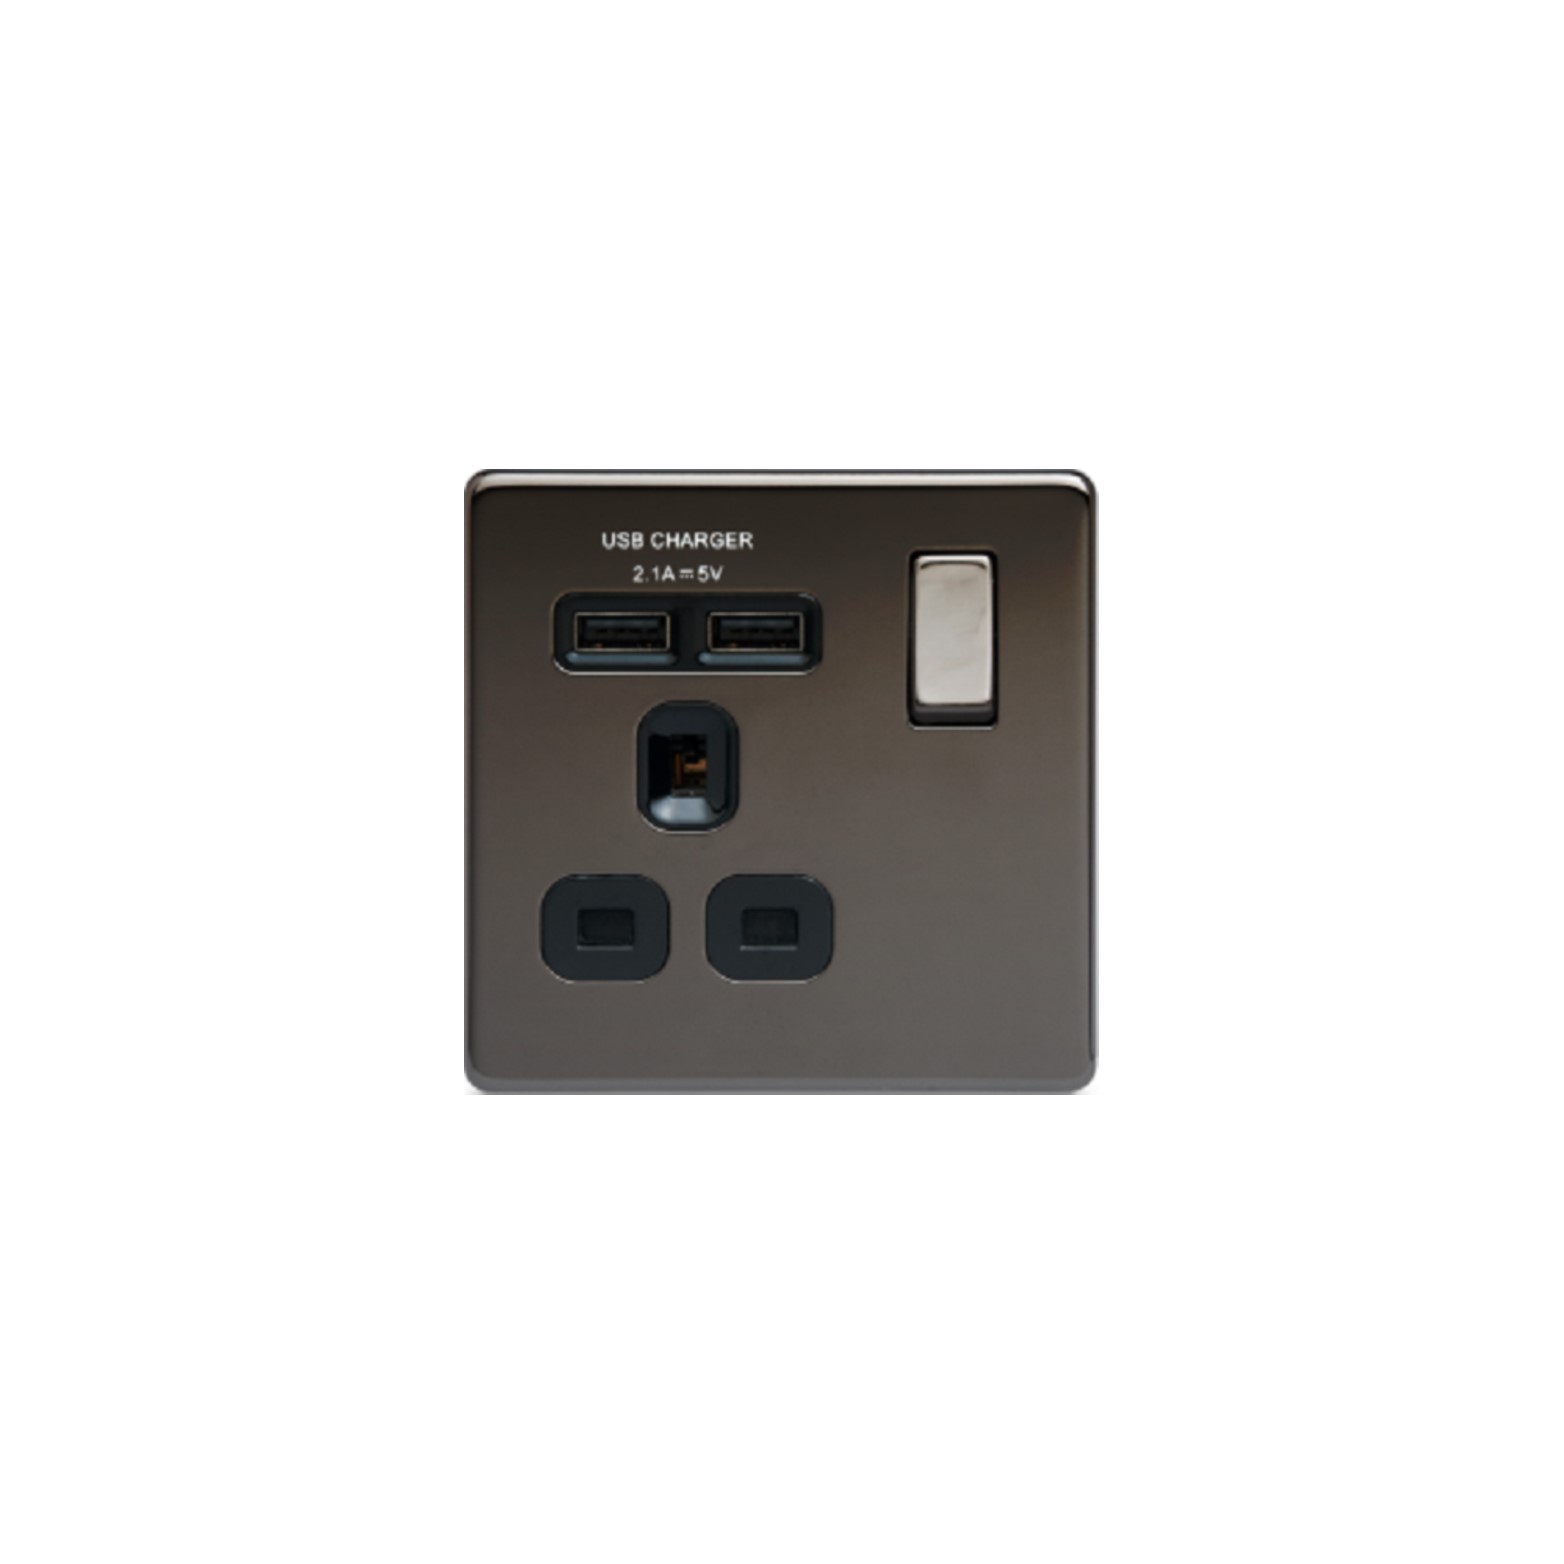 Flatplate Black Nickel 2USB 2.1A 1-Gang 13A Switched Wall Socket Black Insert, USB Charger(FBN21U2B)